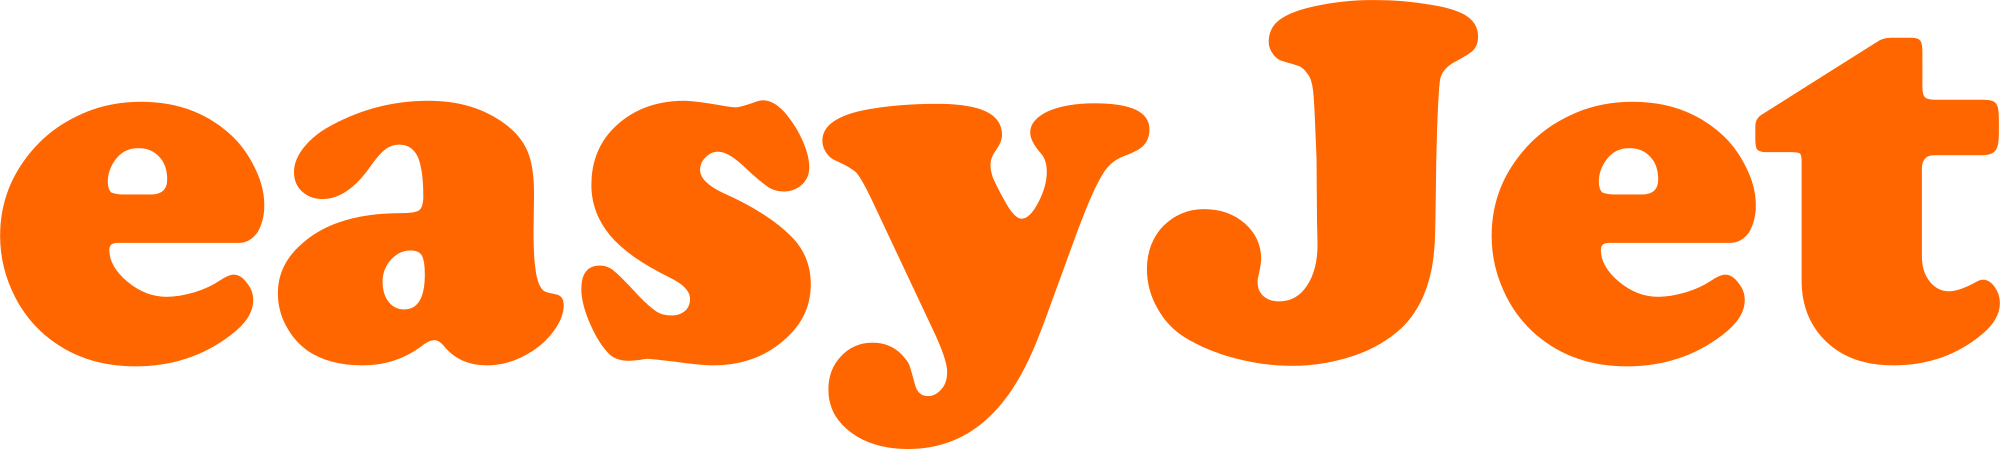 easyJet Switzerland logo